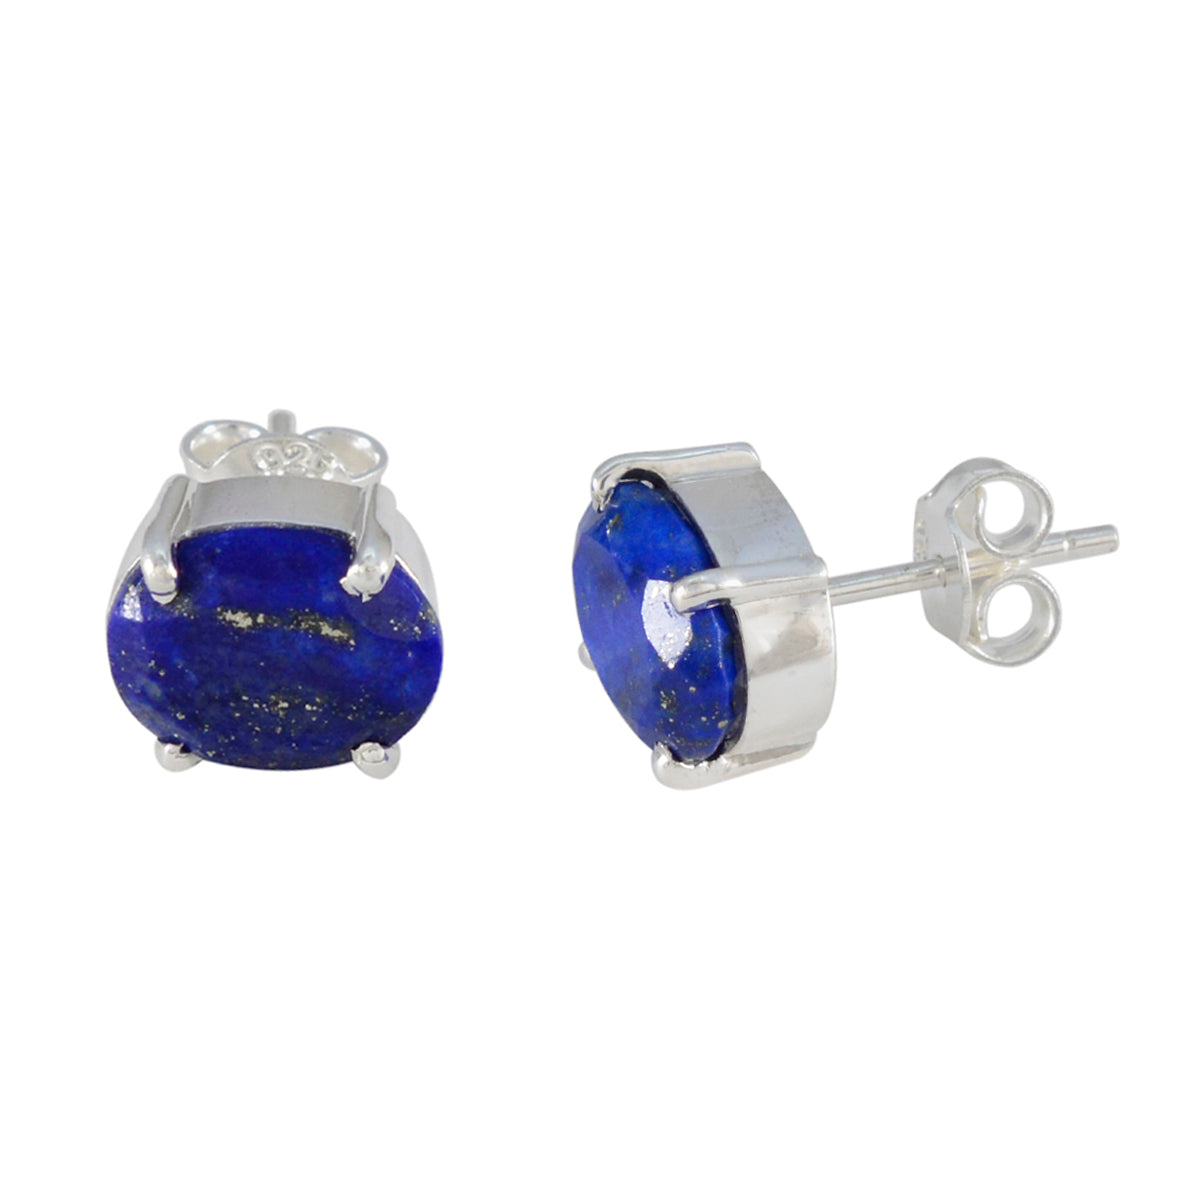 Riyo Spunky Sterling Silber Ohrring für Demoiselle Lapislazuli Ohrring Lünette Fassung Blauer Ohrring Ohrstecker